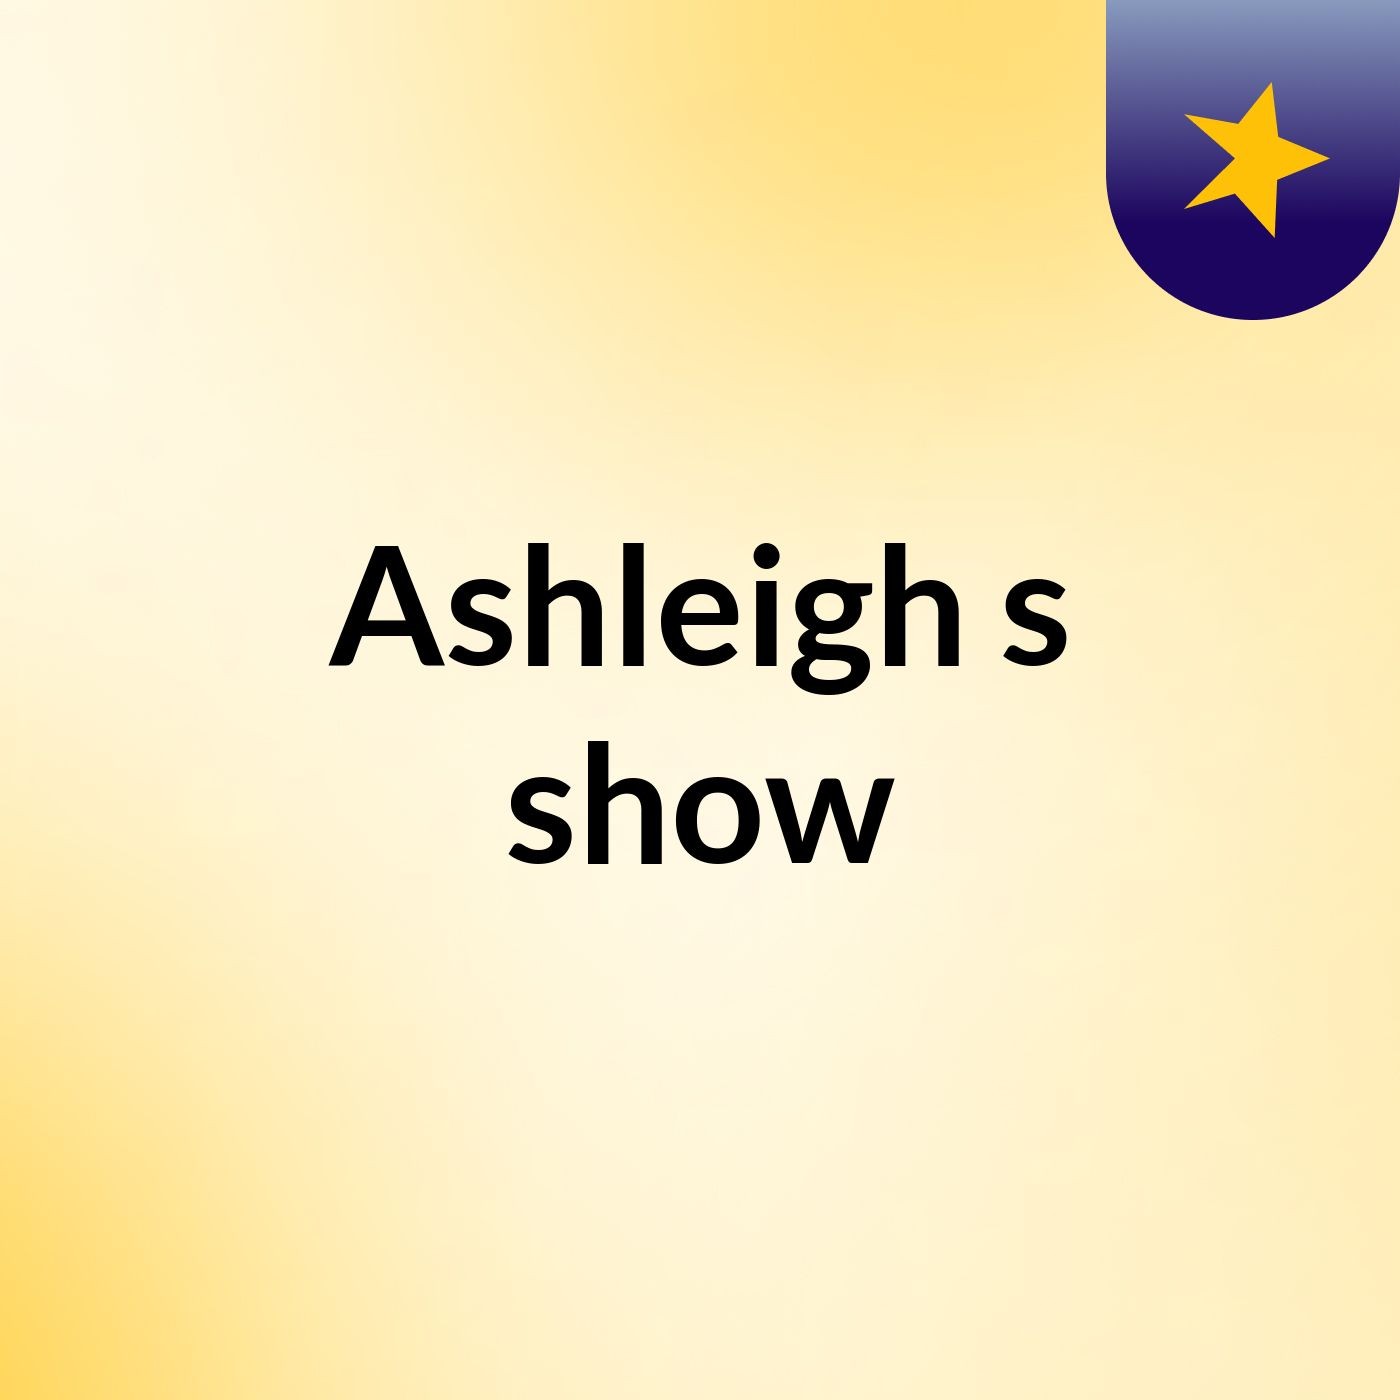 Ashleigh's show